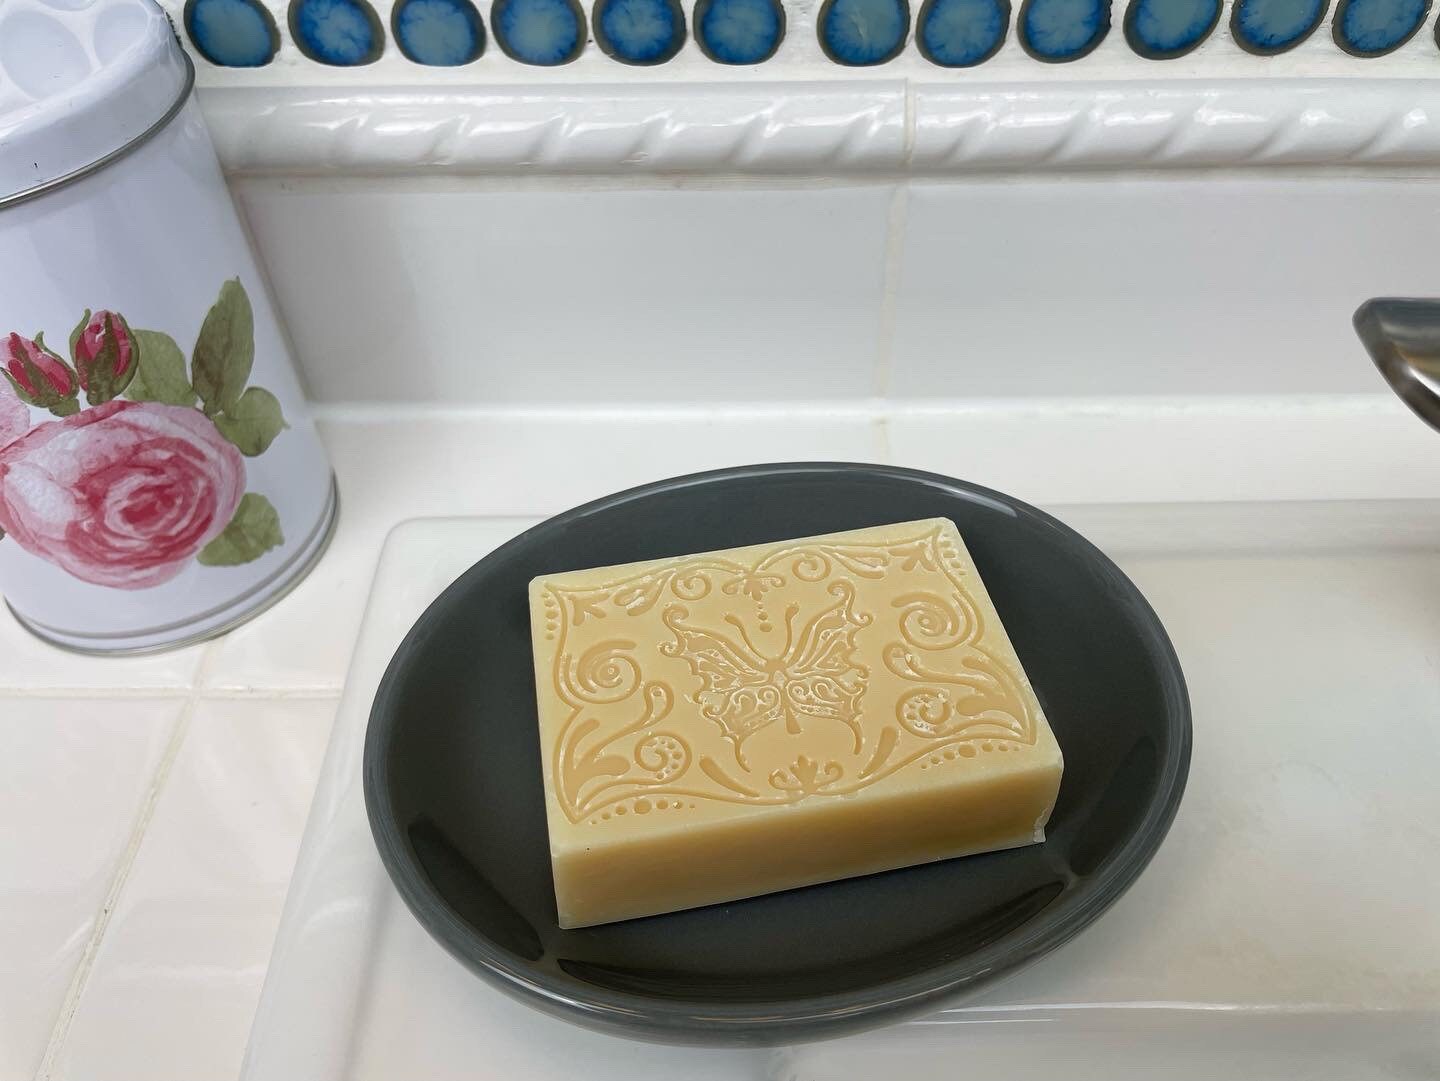 Peppermint + Tea Tree Icelandic Sheep Milk Bar Soap